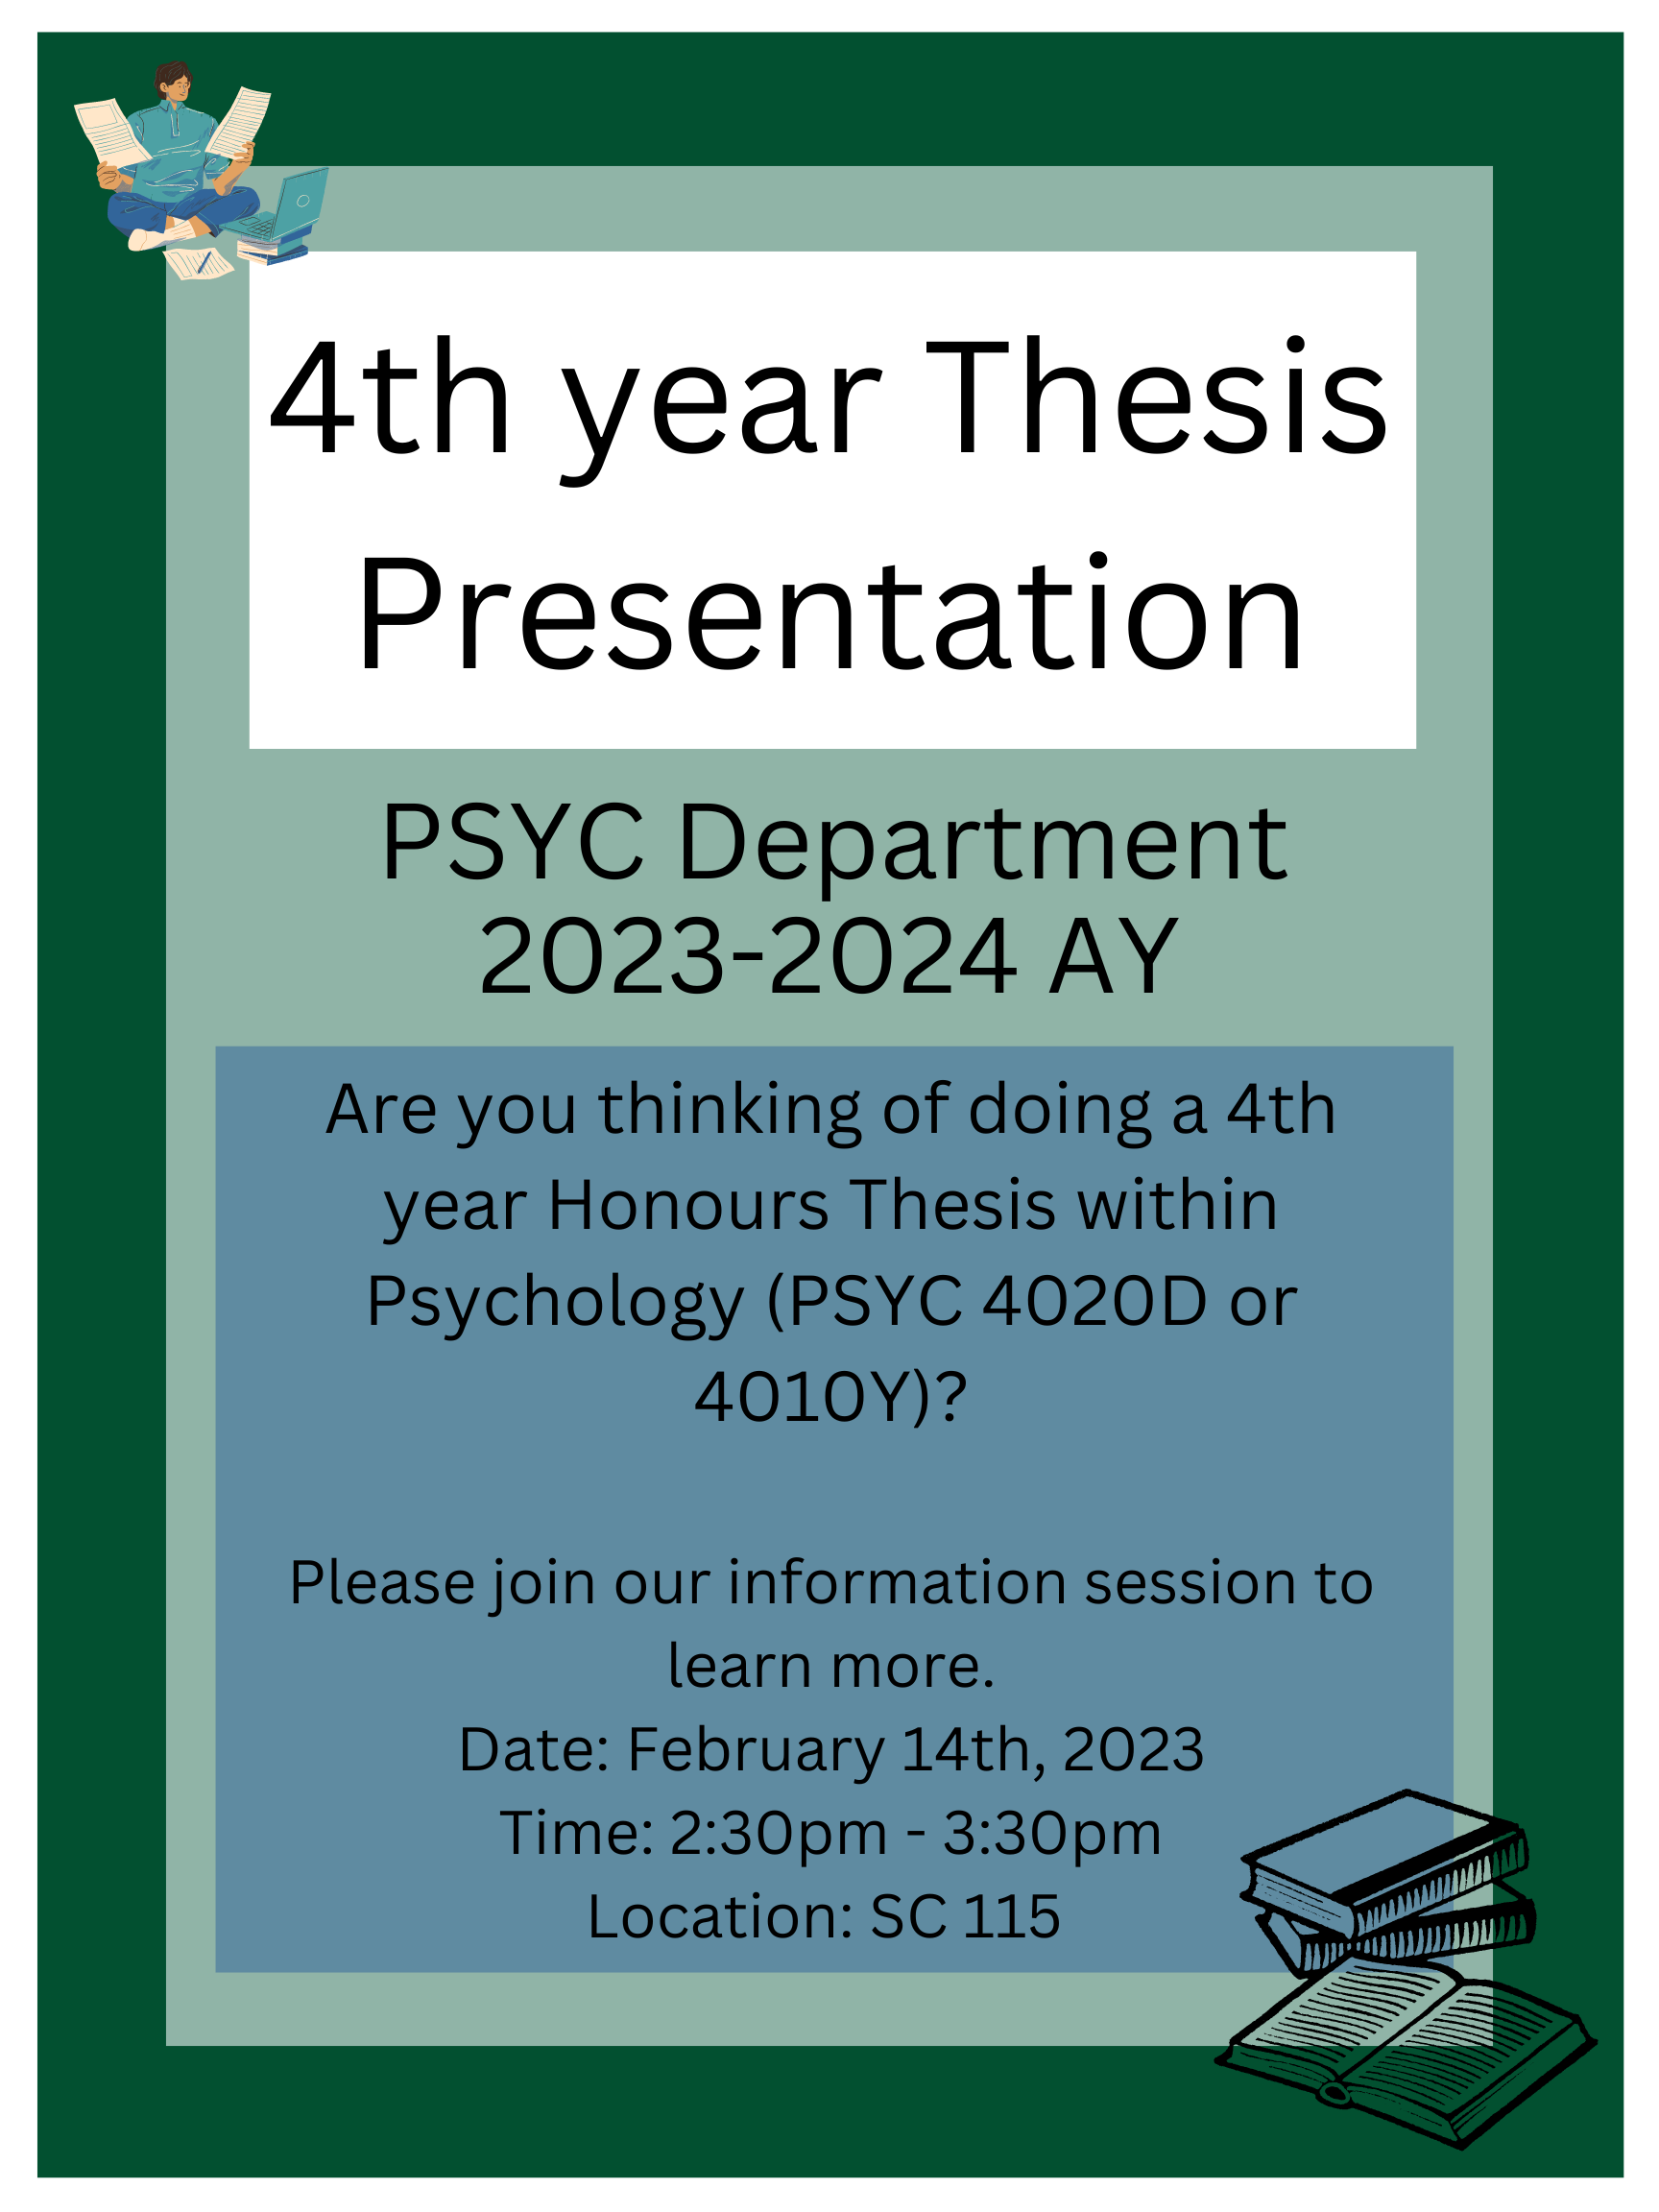 4th Year Thesis Presentation